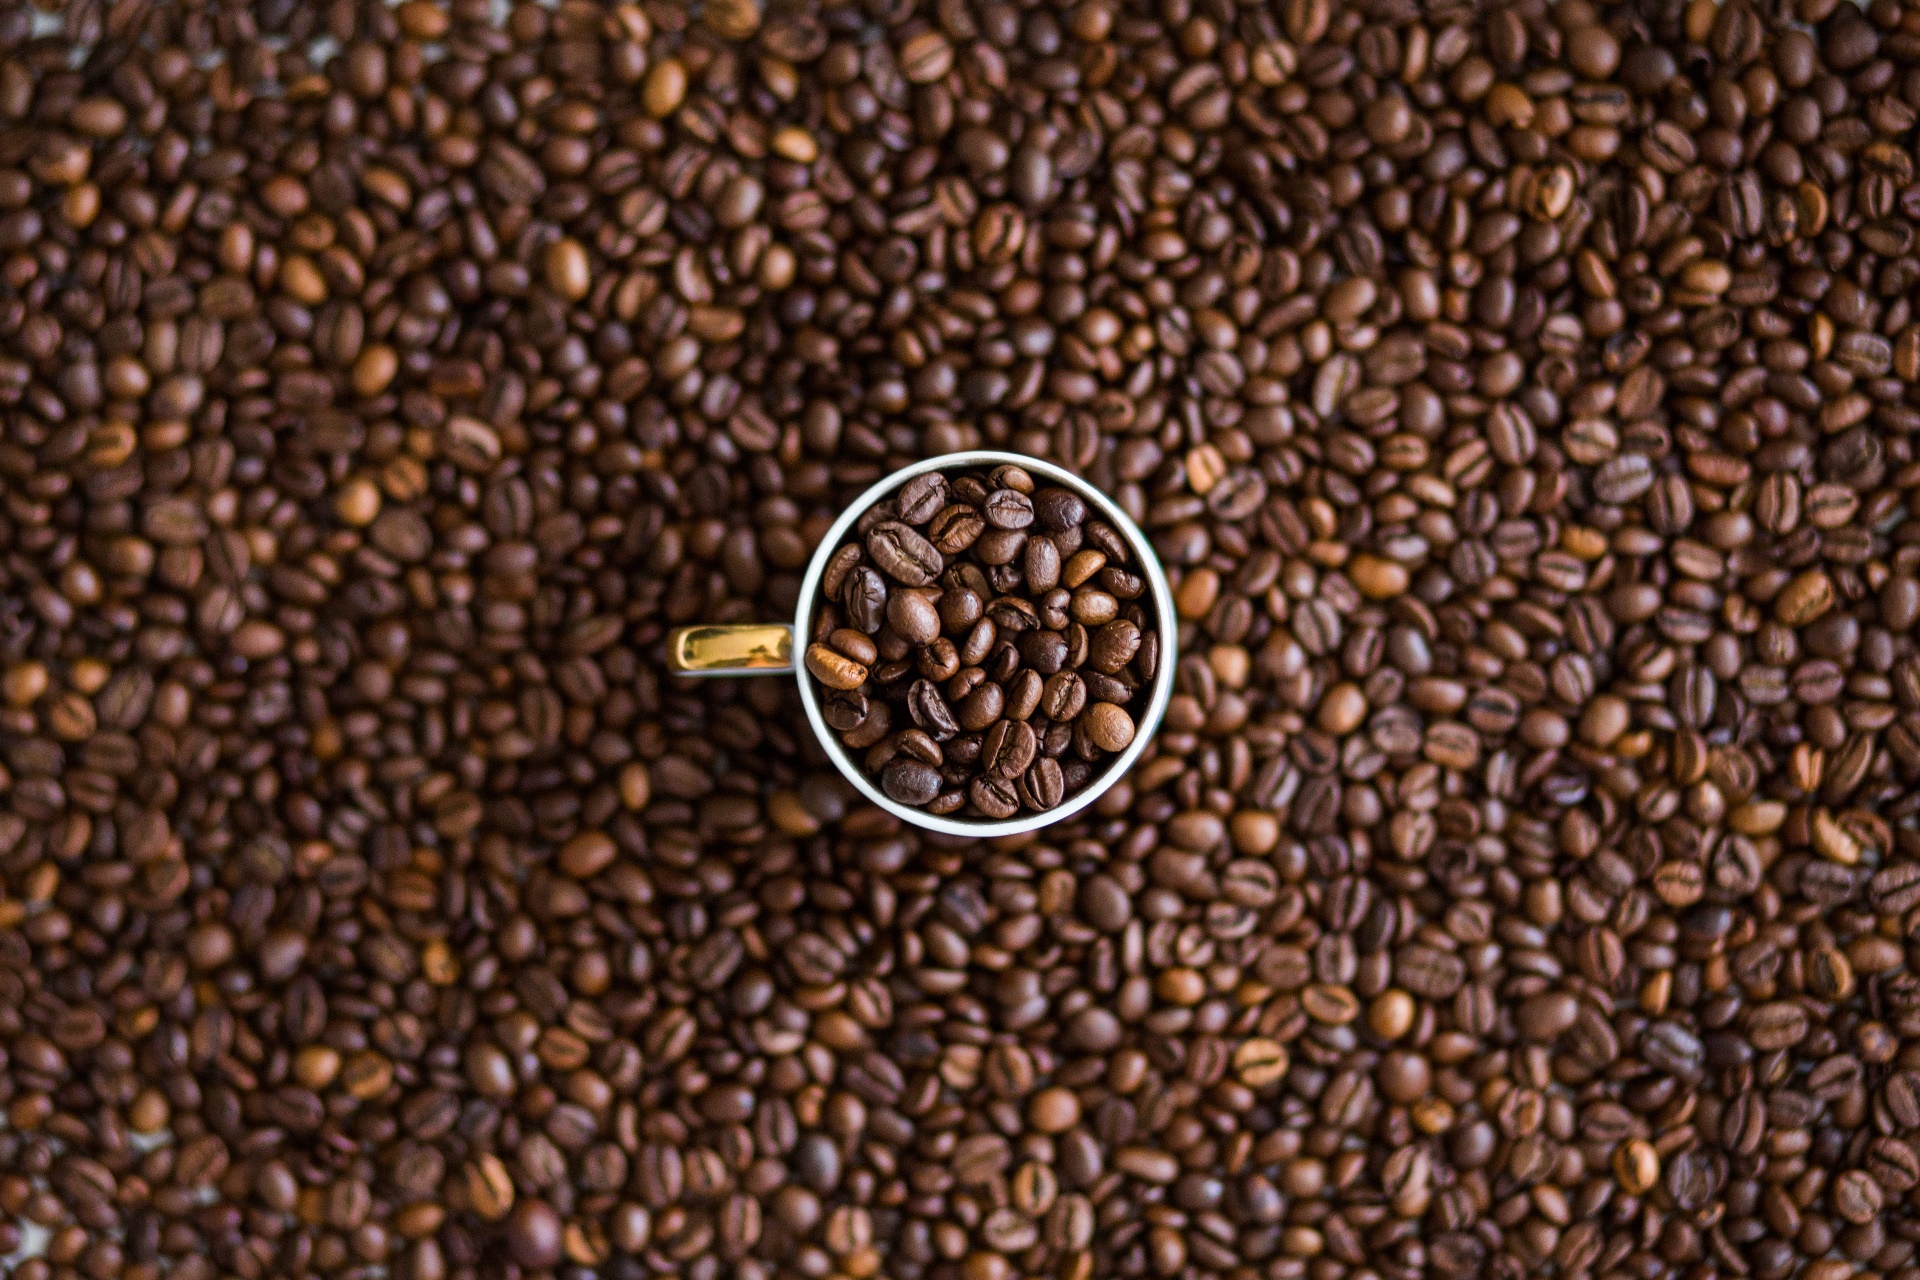 General 1920x1280 food cup coffee coffee beans top view brown